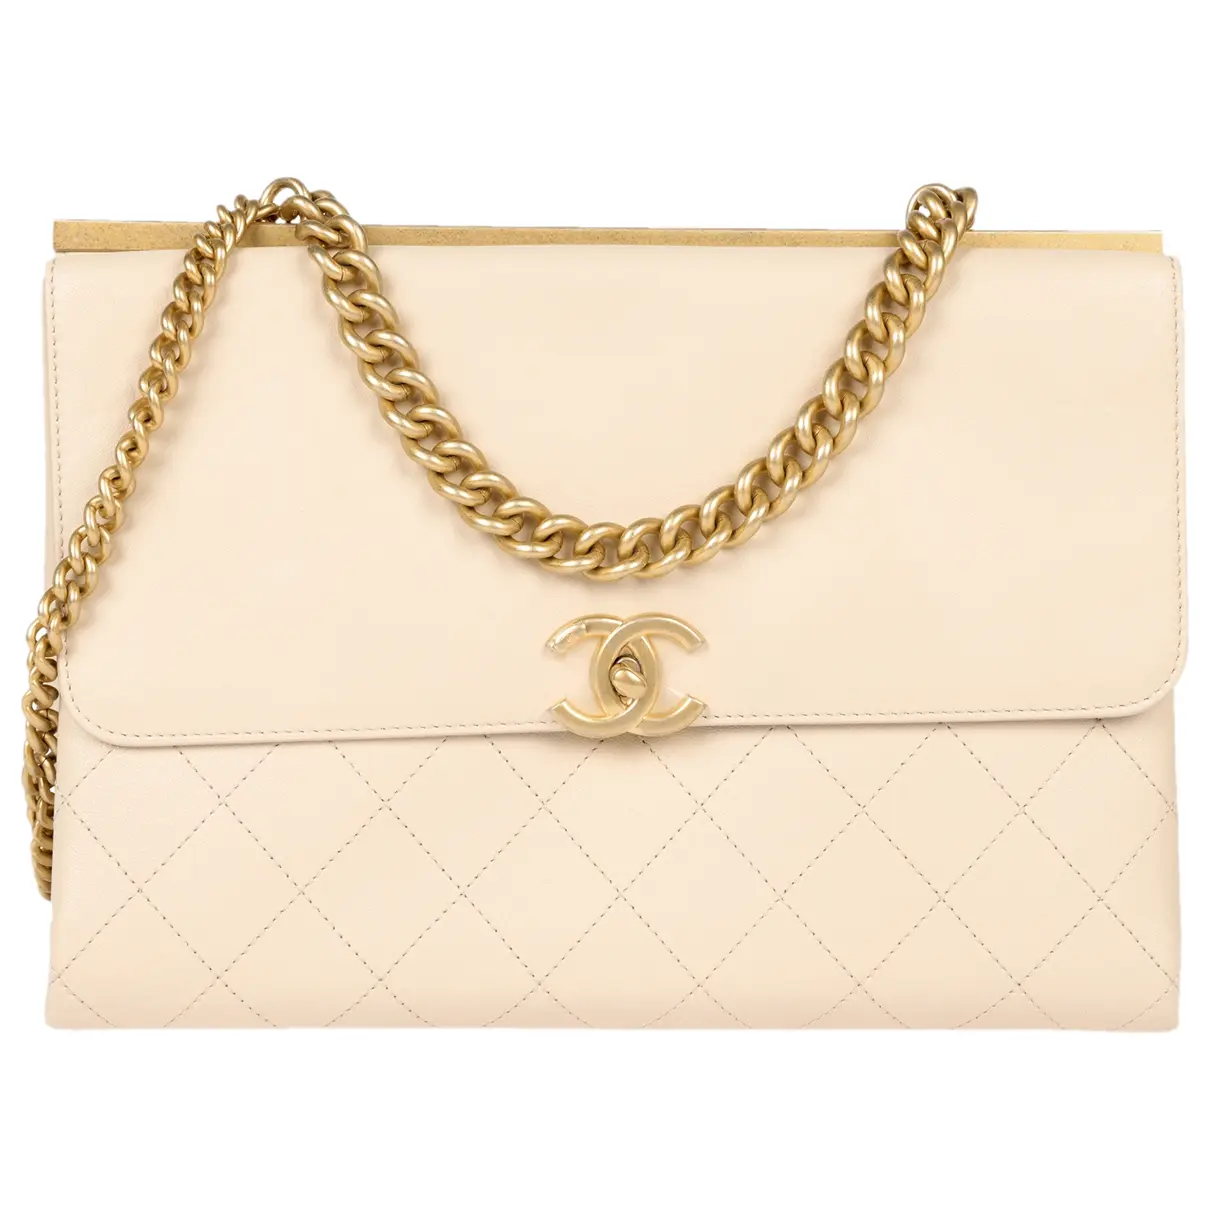 Coco Luxe leather handbag